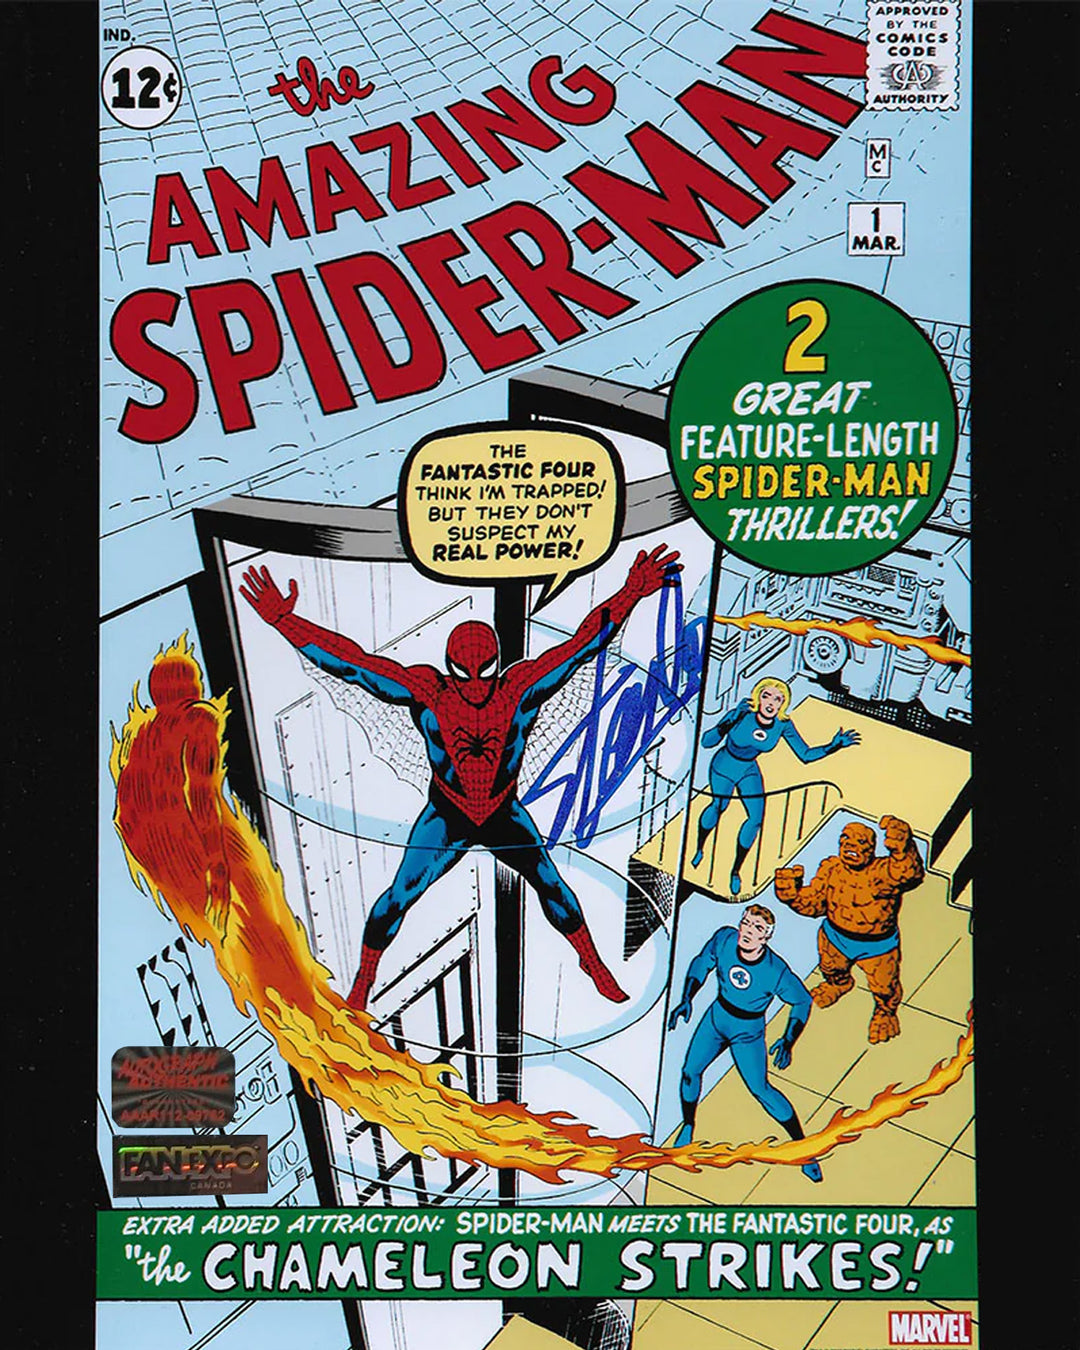 Stan Lee Signed 8X10: Amazing Spider-Man #1, Marvel, Pop Culture Art, Comics, Autographed, Signed, AAOCC33139